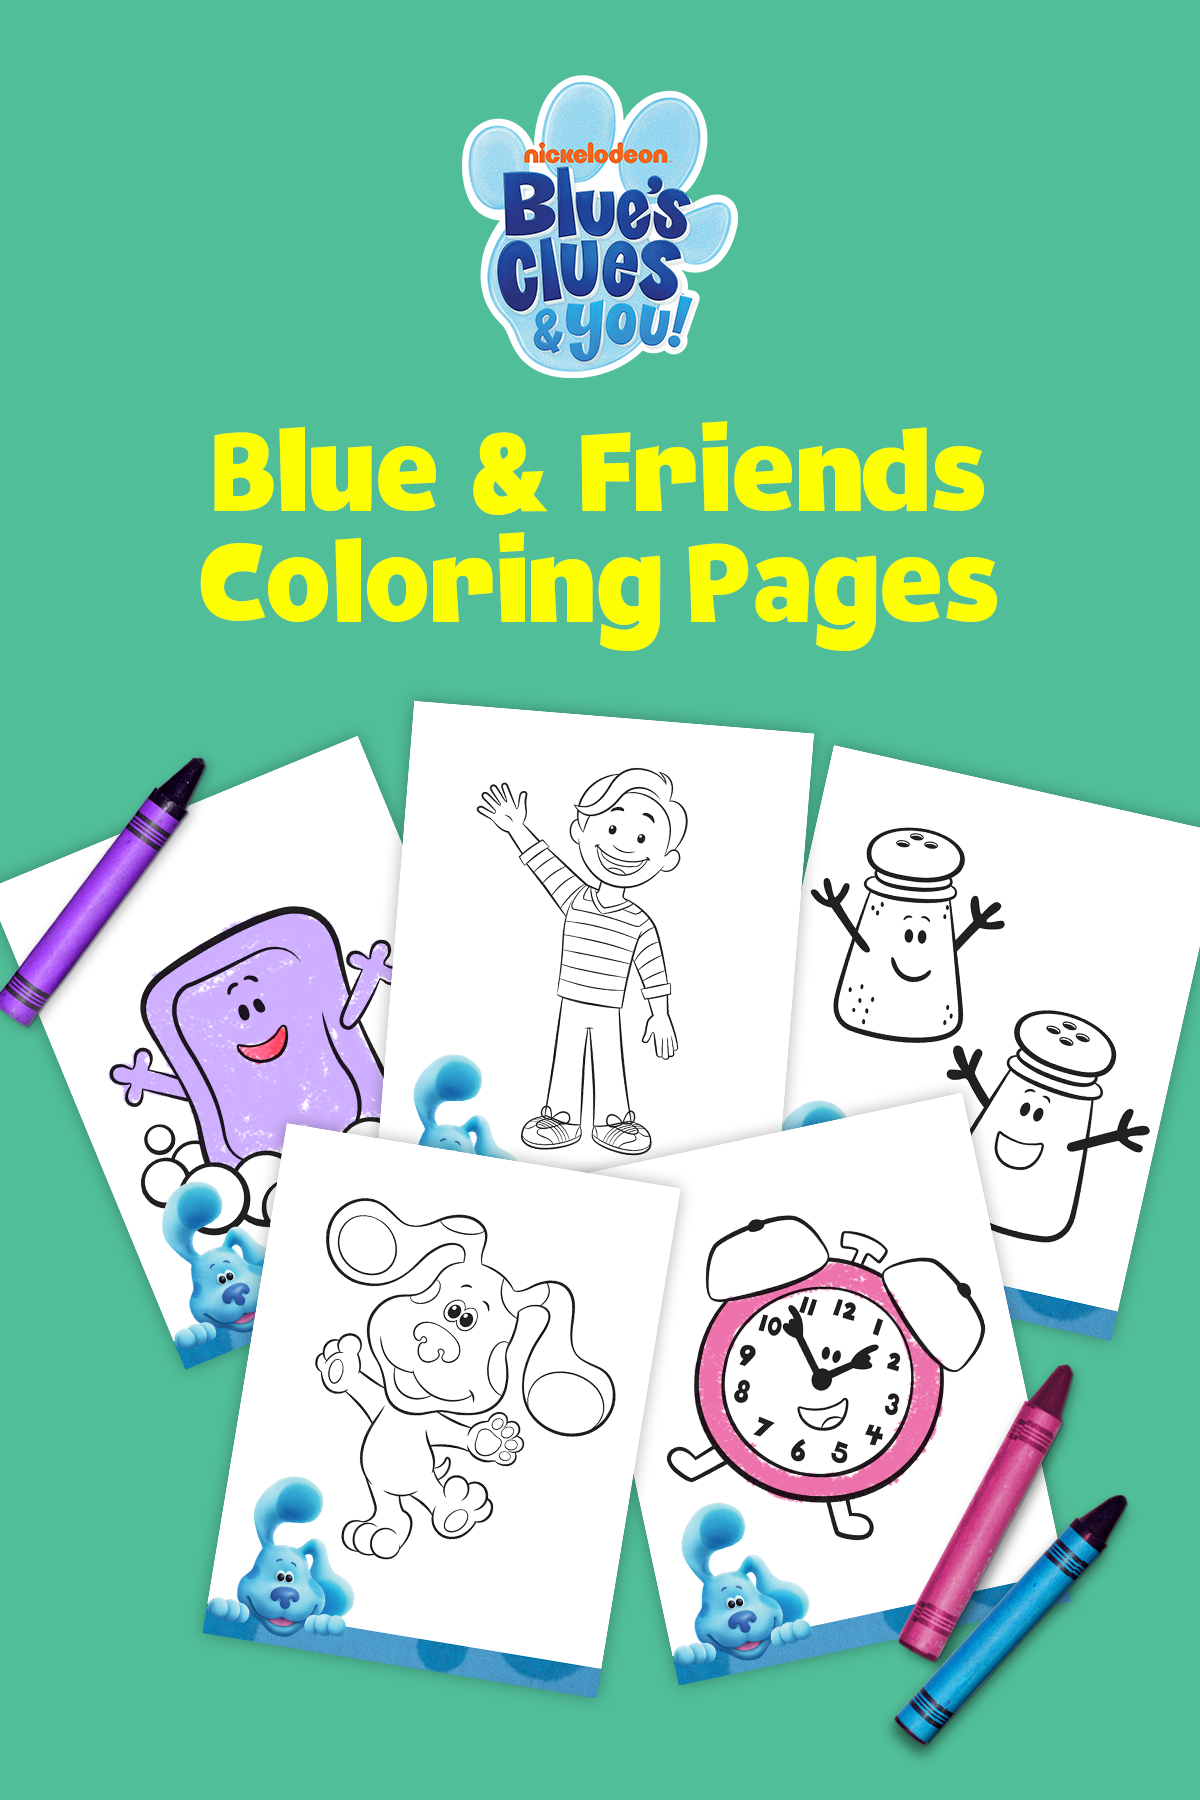 Blue's Clues & Friends Coloring Pages